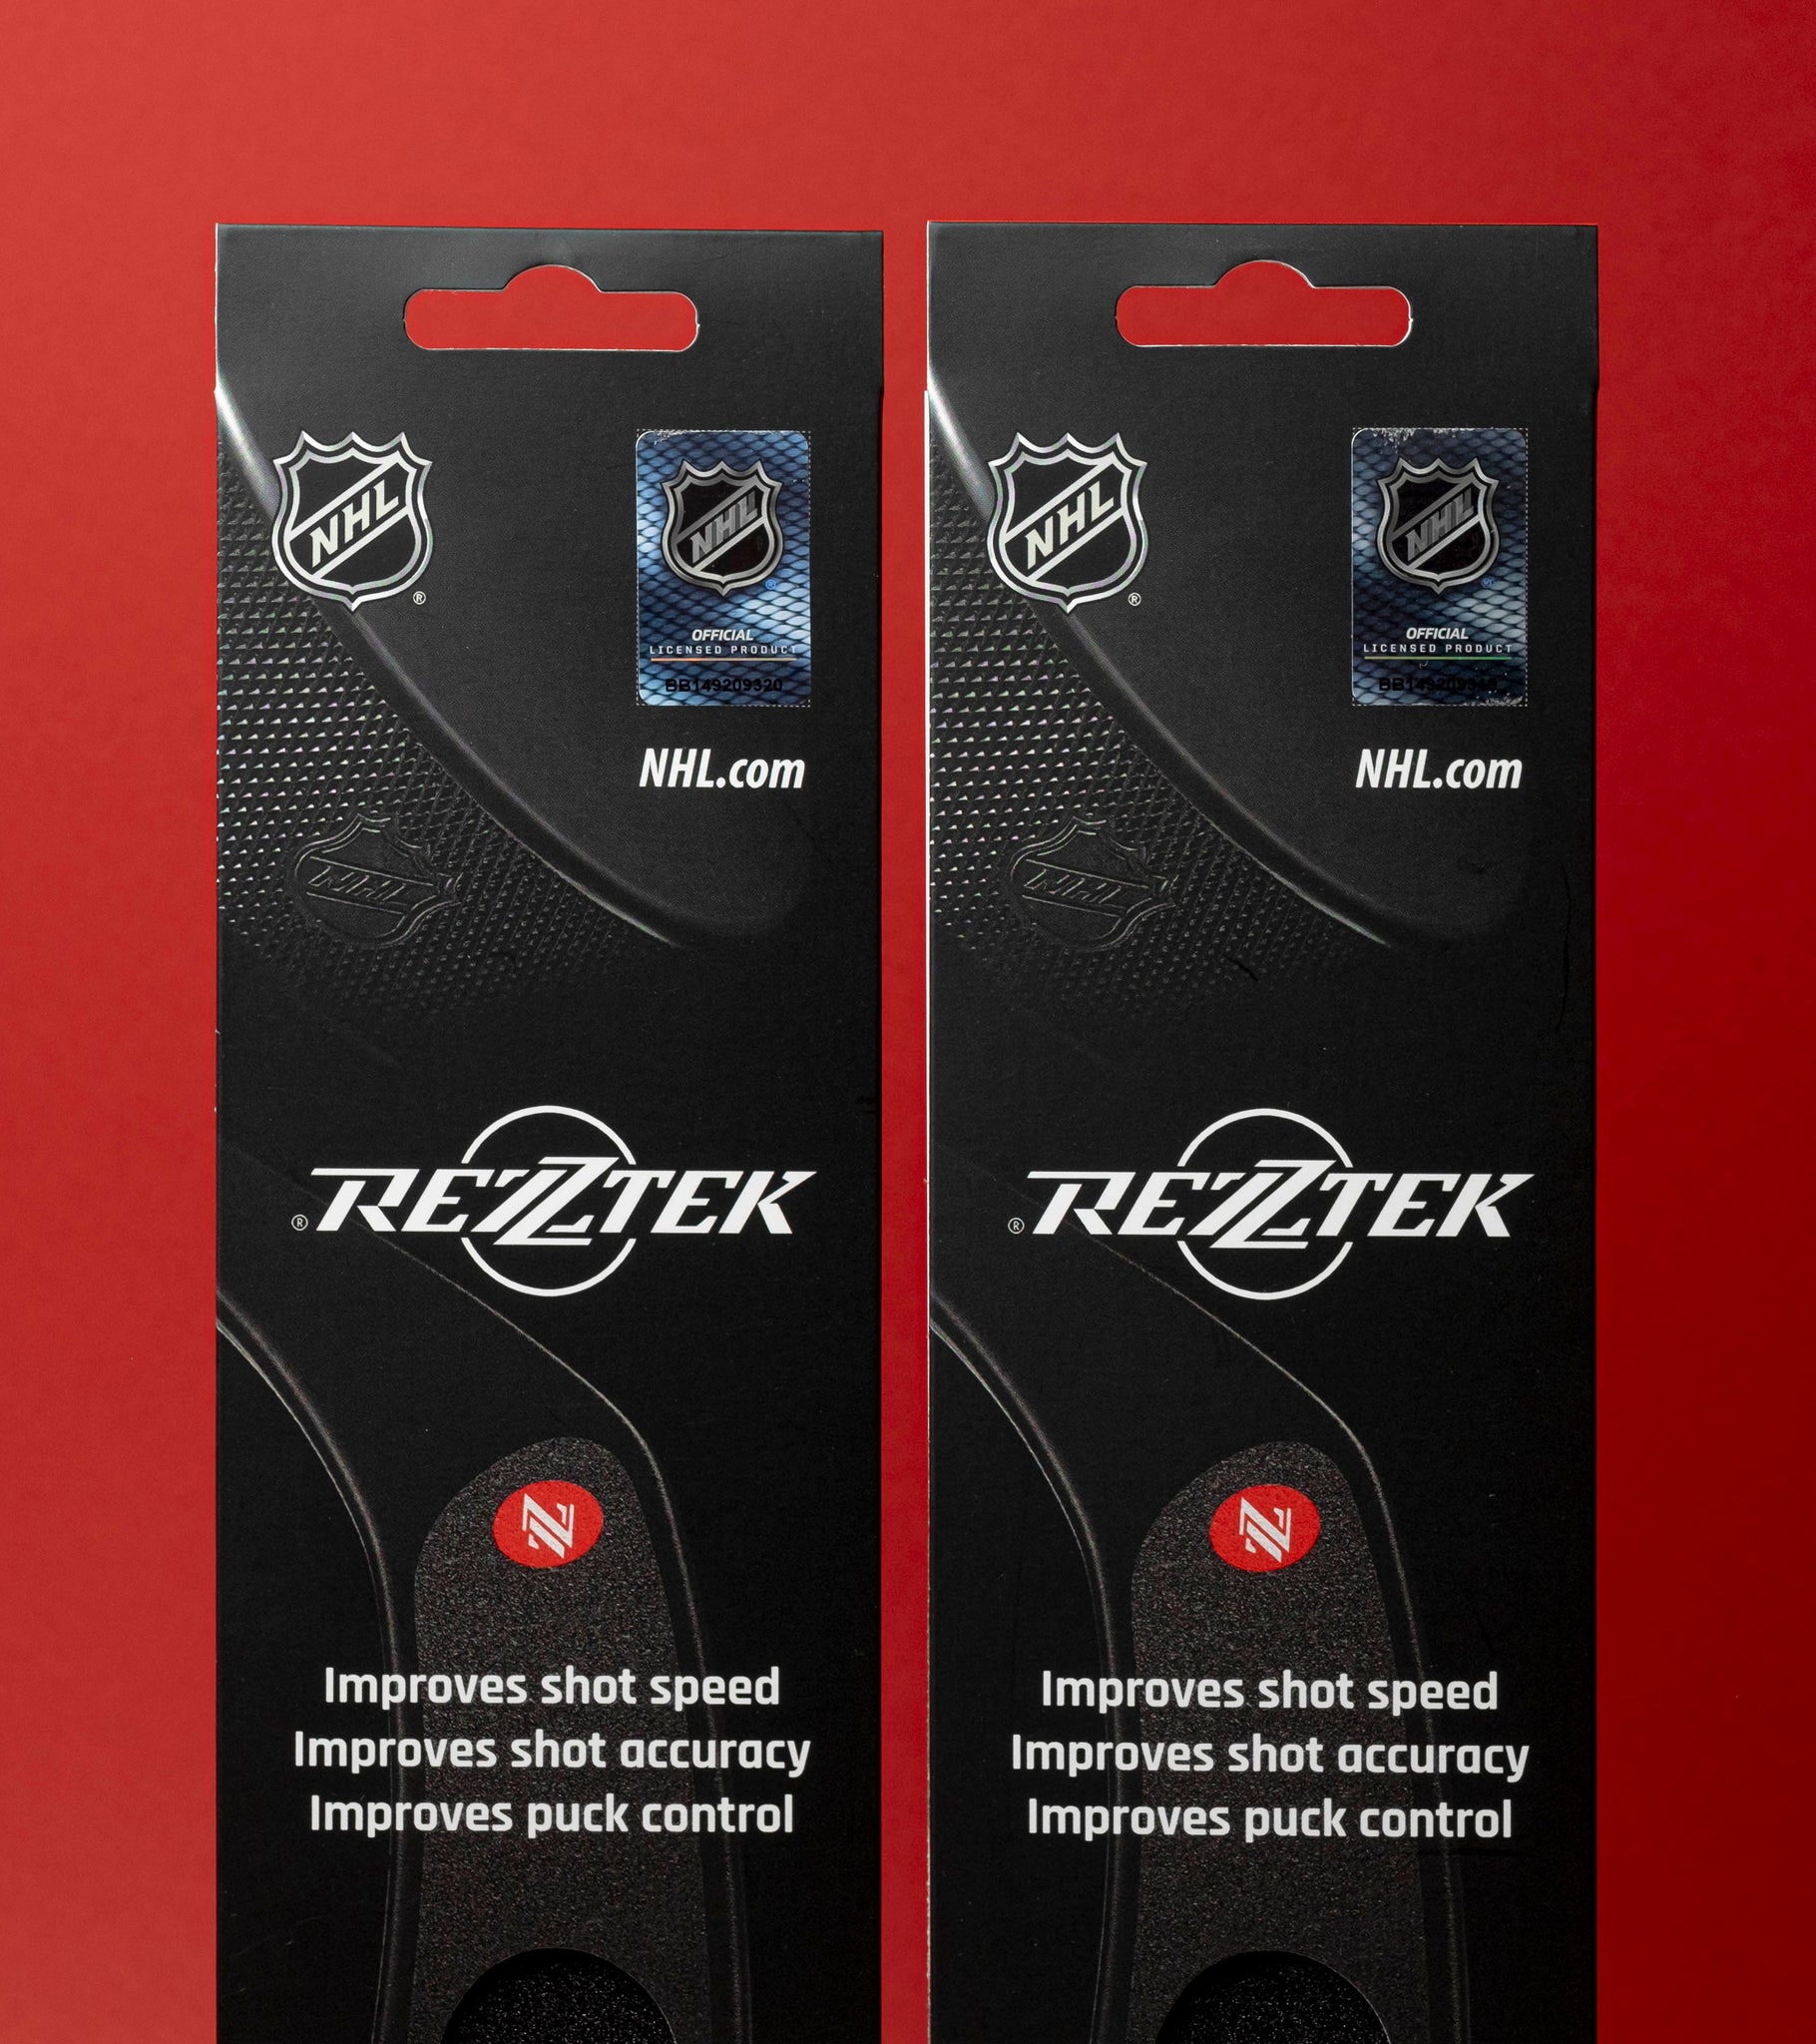 Rezztek NHL Licensed Product